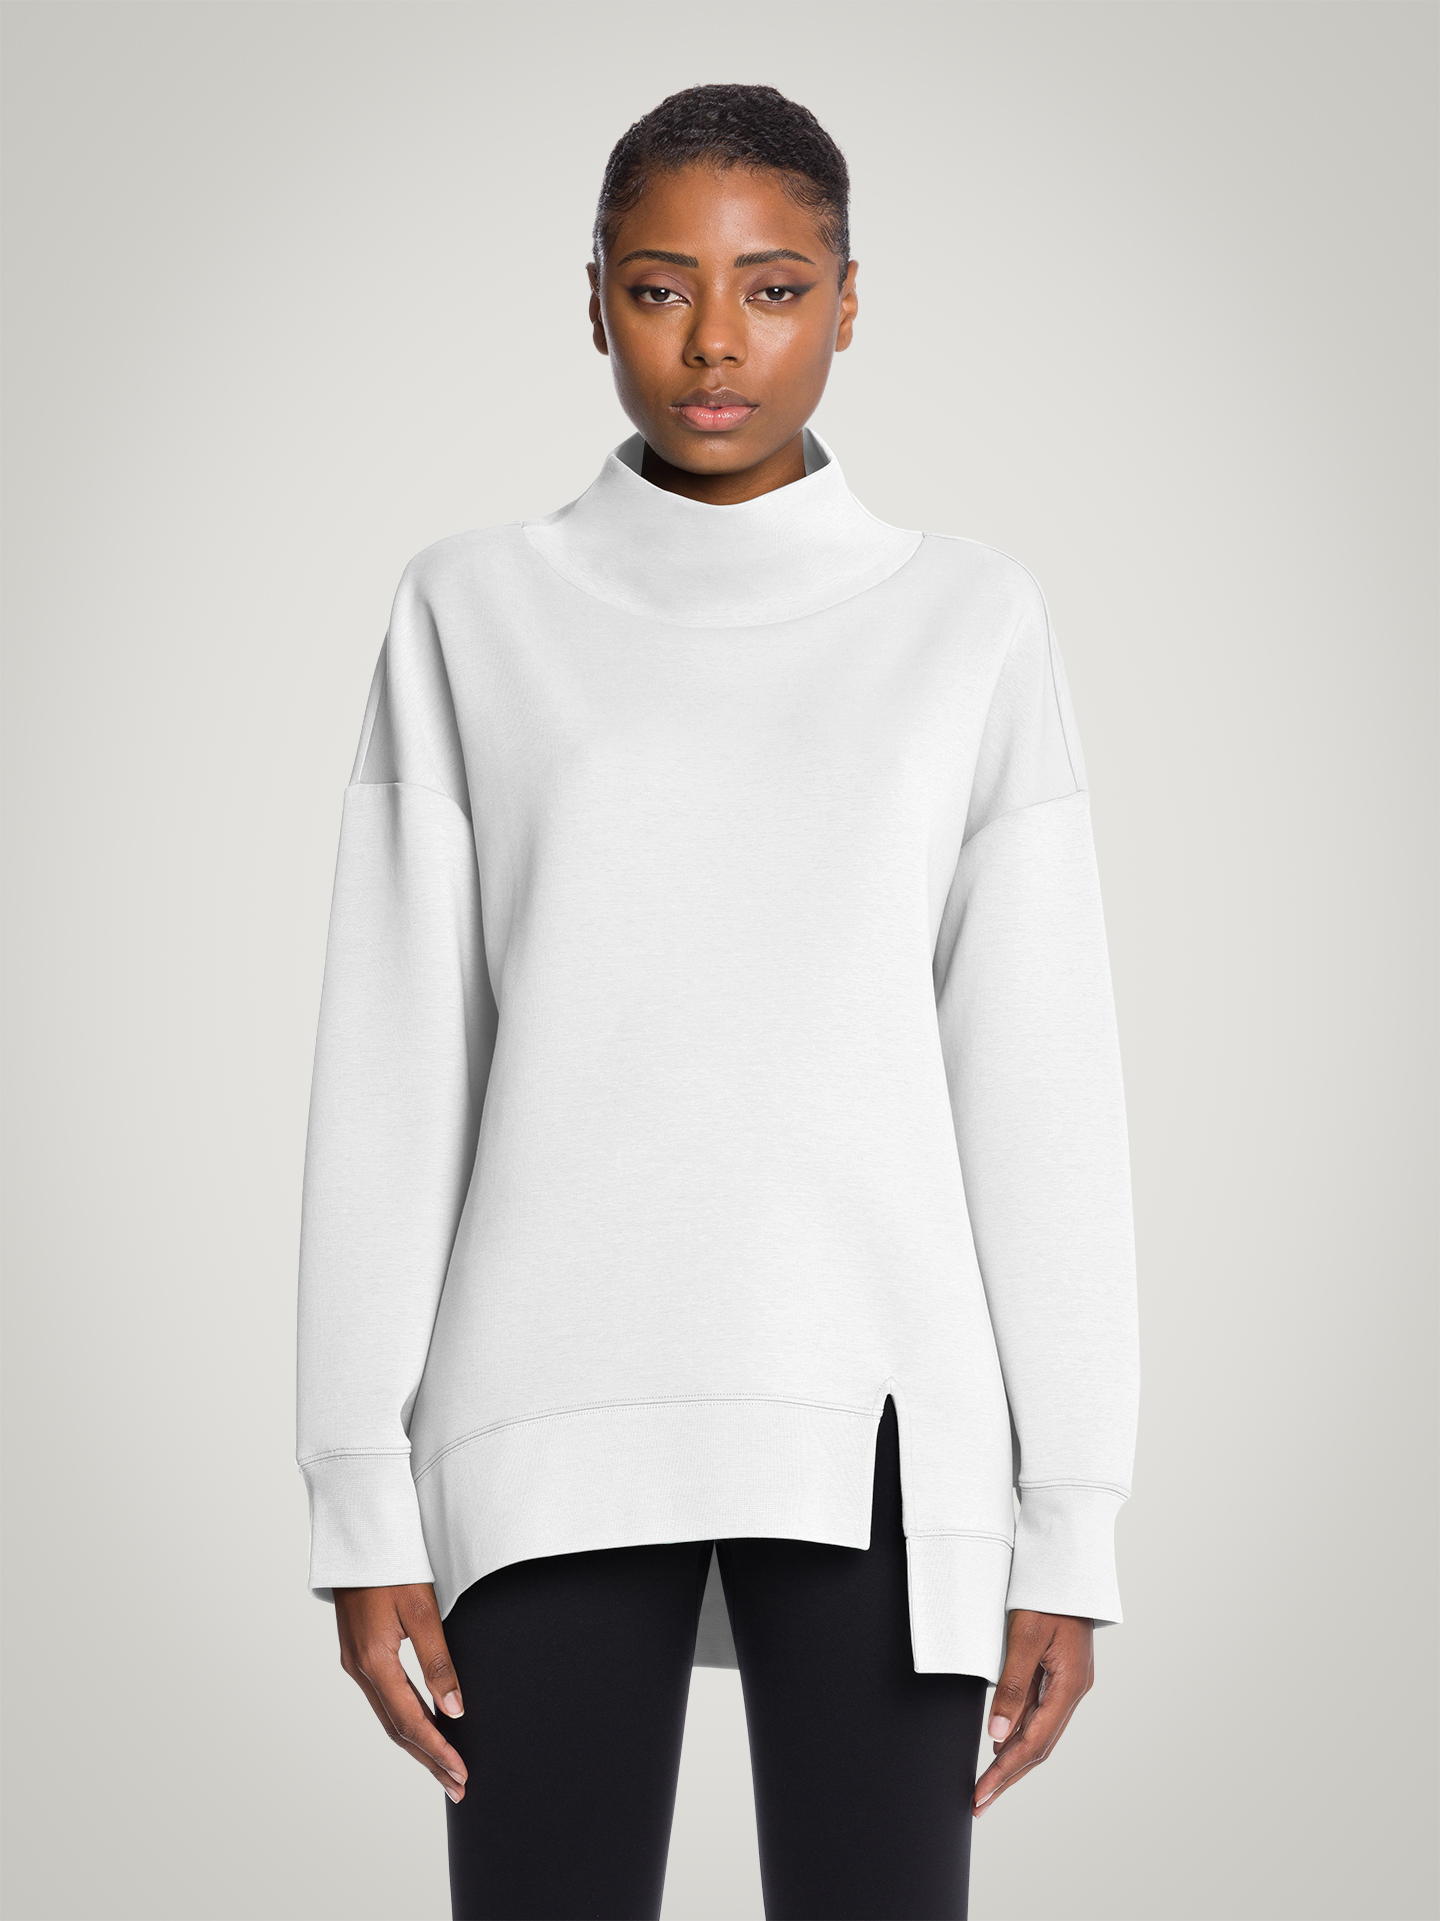 Wolford - Sweater Top Long Sleeves, Frau, white, Größe: M günstig online kaufen